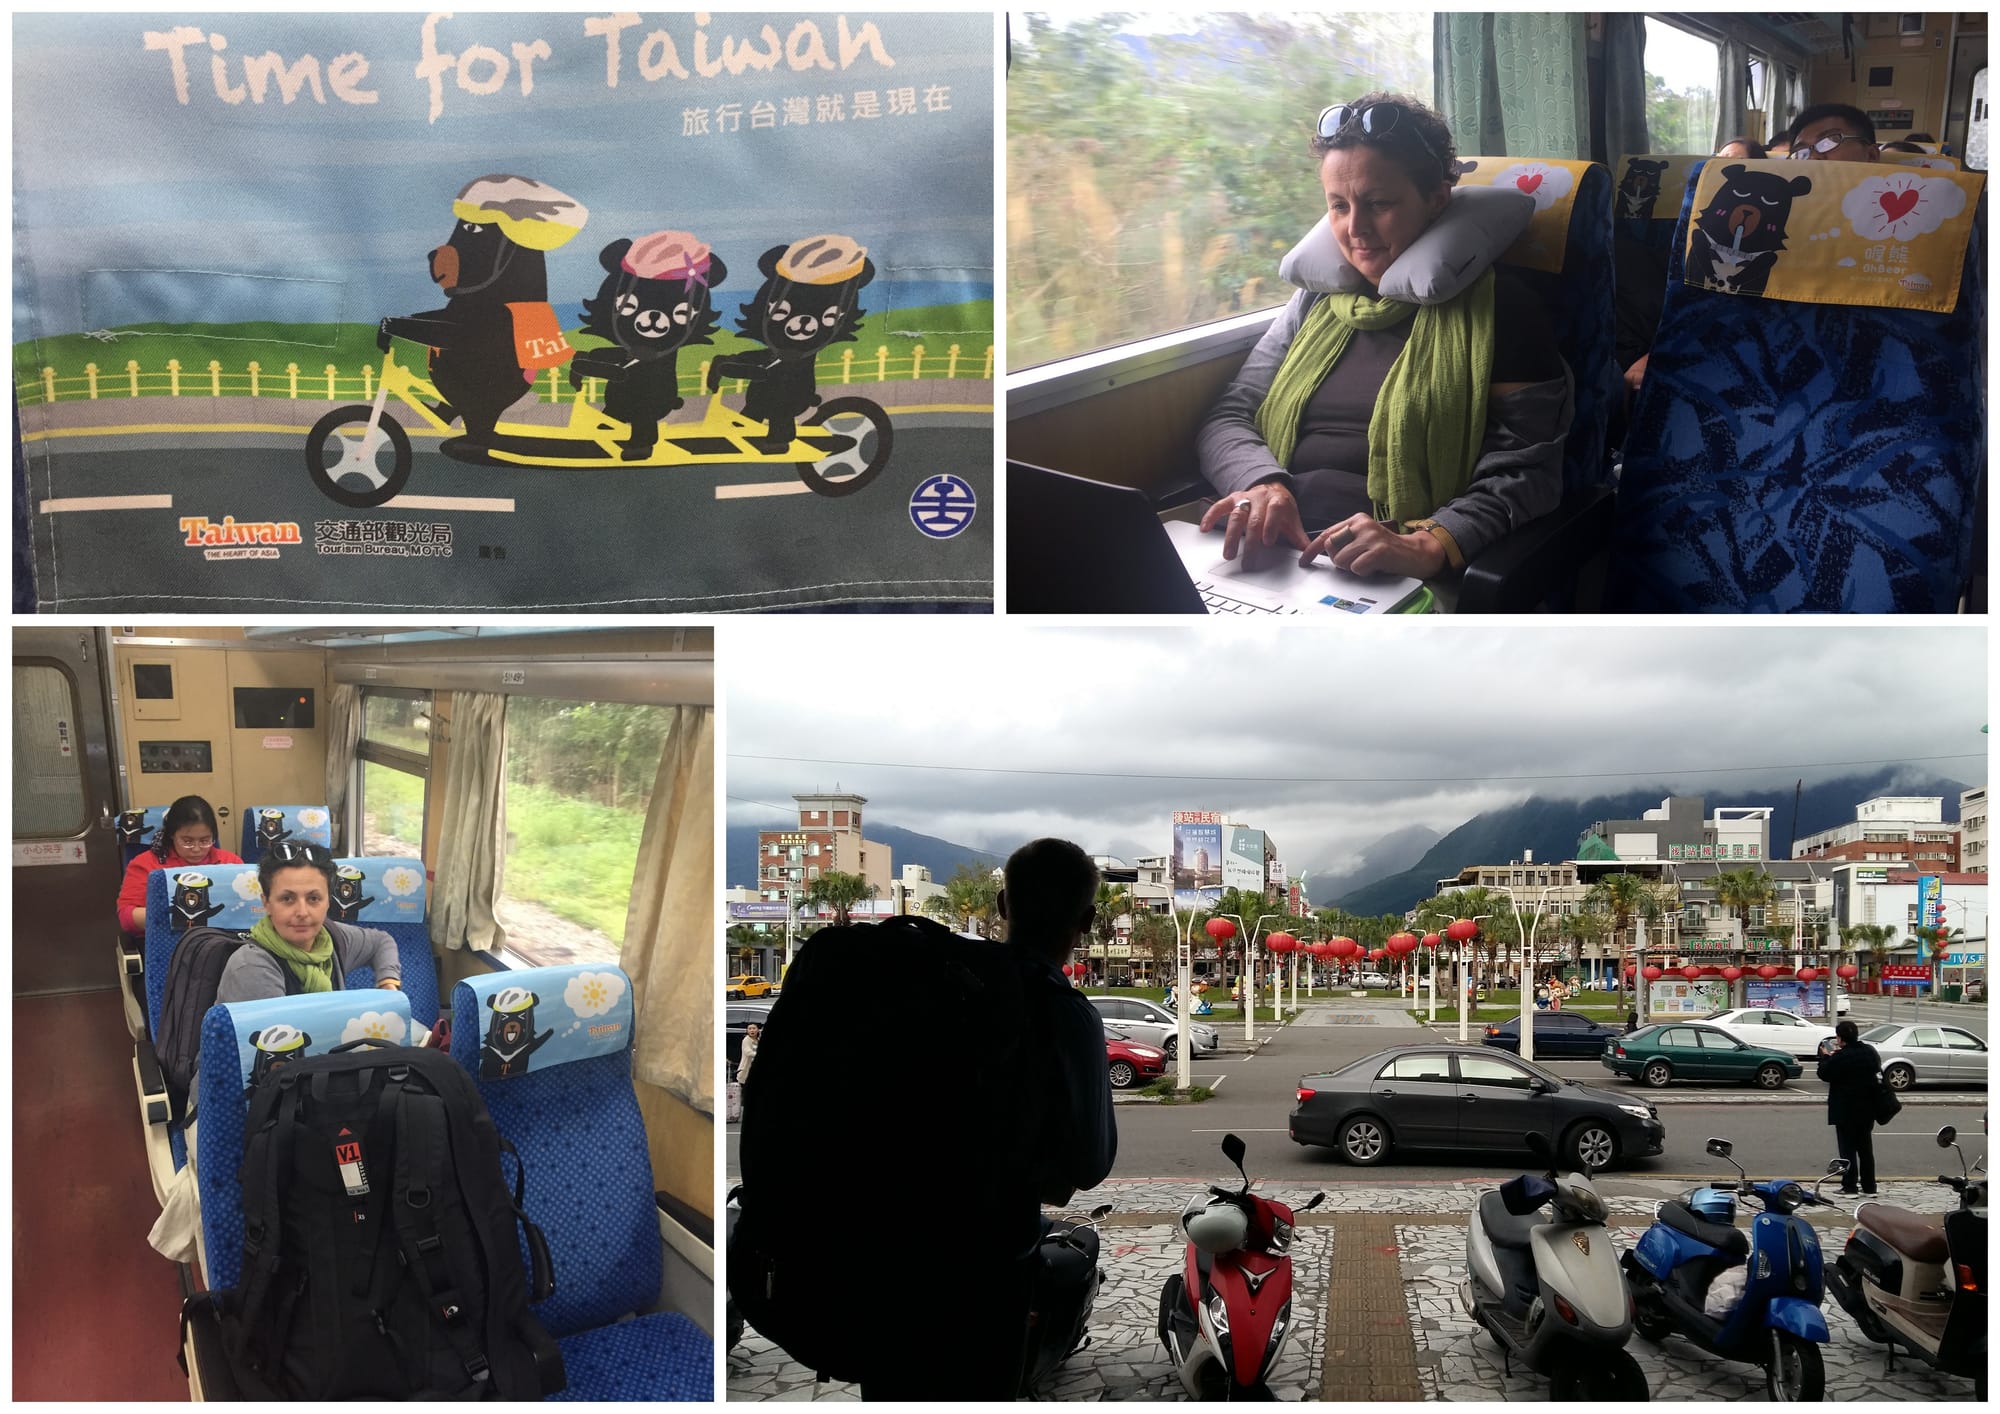 Aliz Ertler's trip to Taiwan